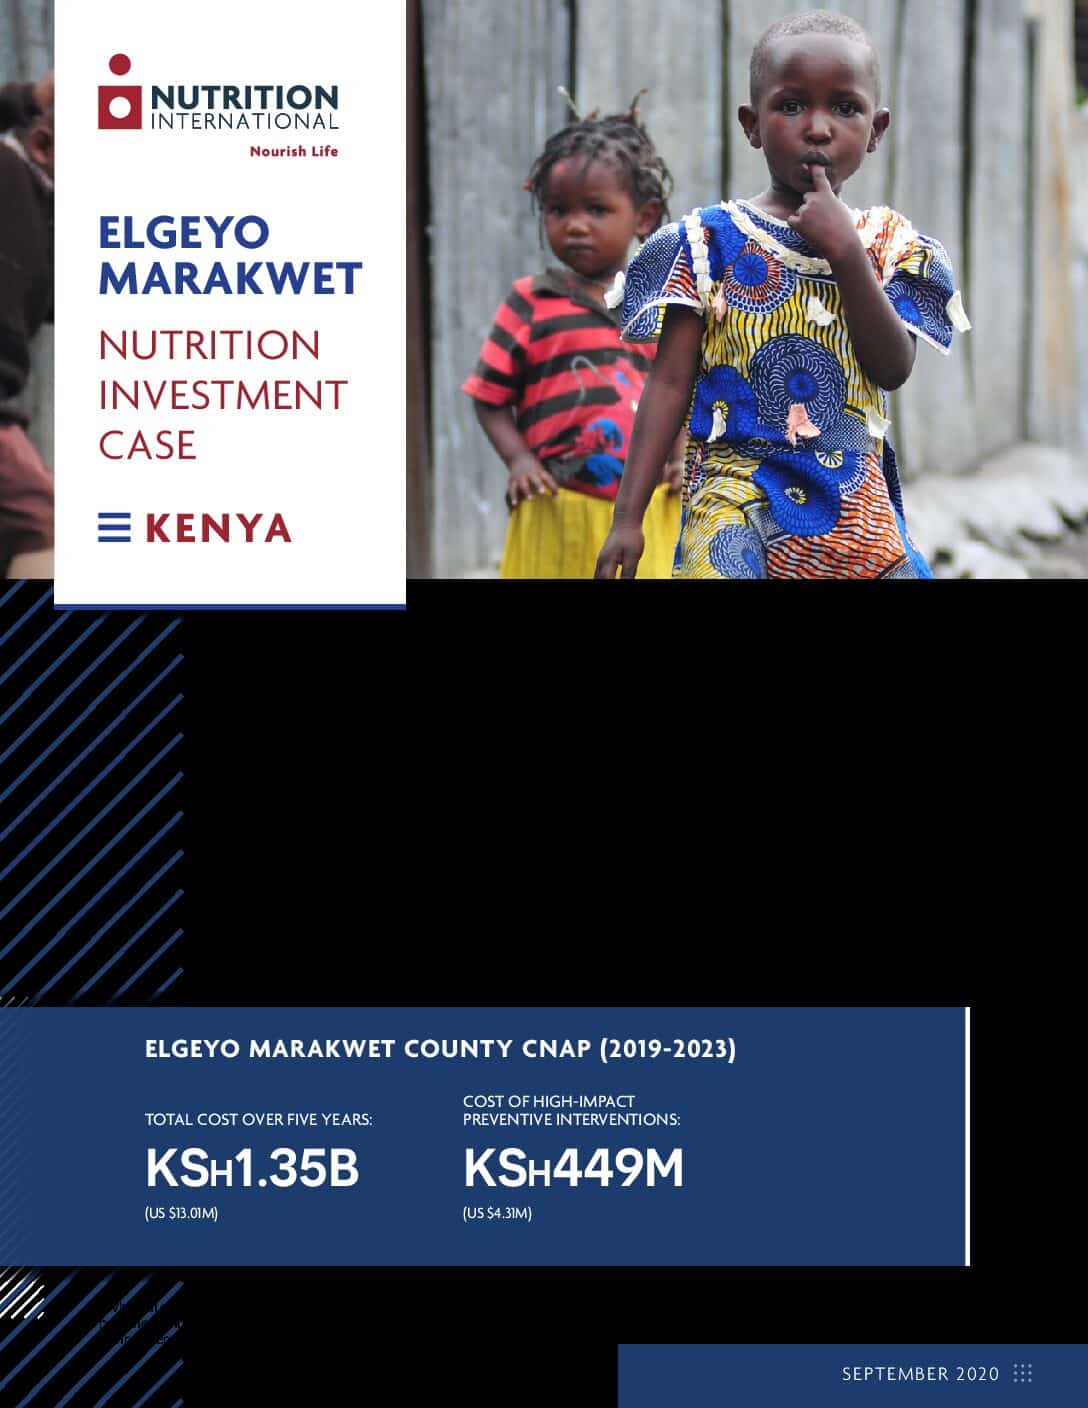 Elgeyo Marakwet County Nutrition Investment Case thumbnail